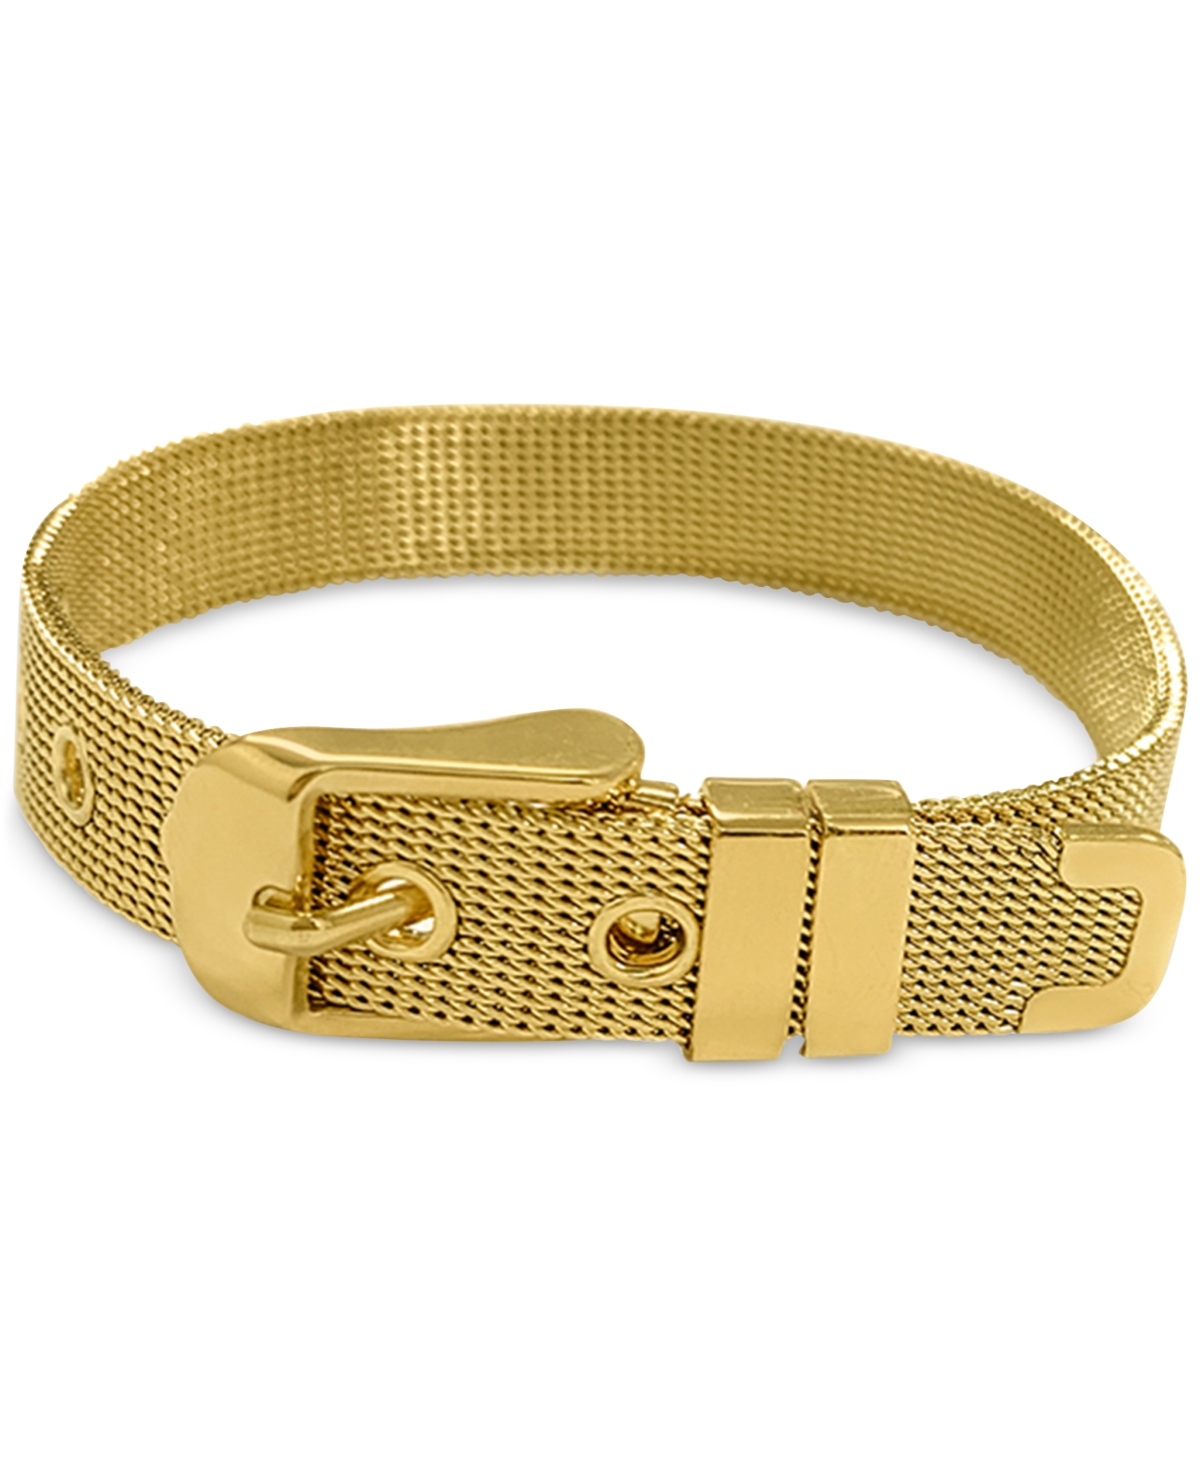 Adornia 14k Gold-plated Belt-style Mesh Flex Bracelet